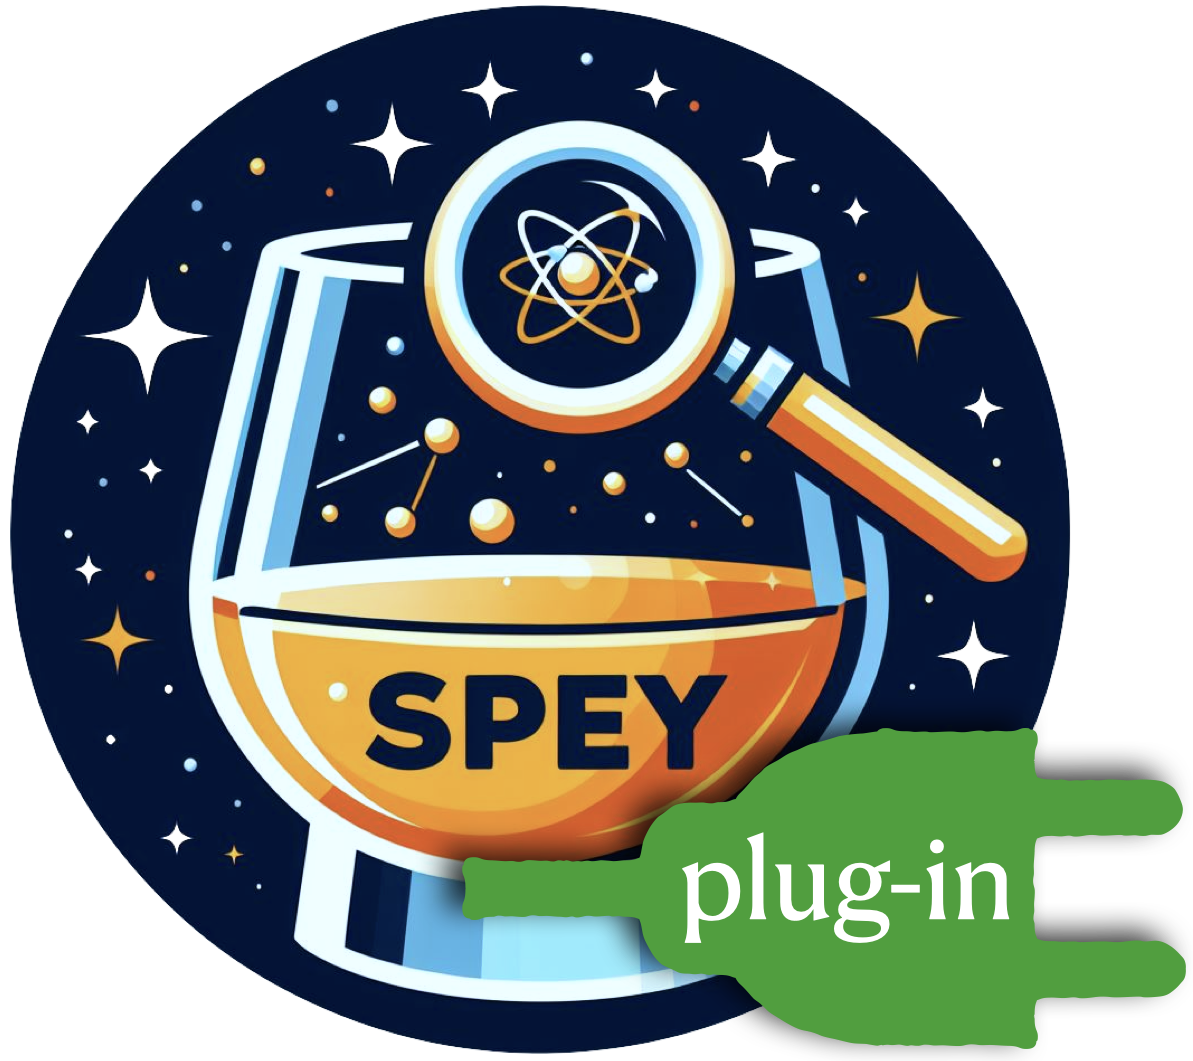 Spey logo